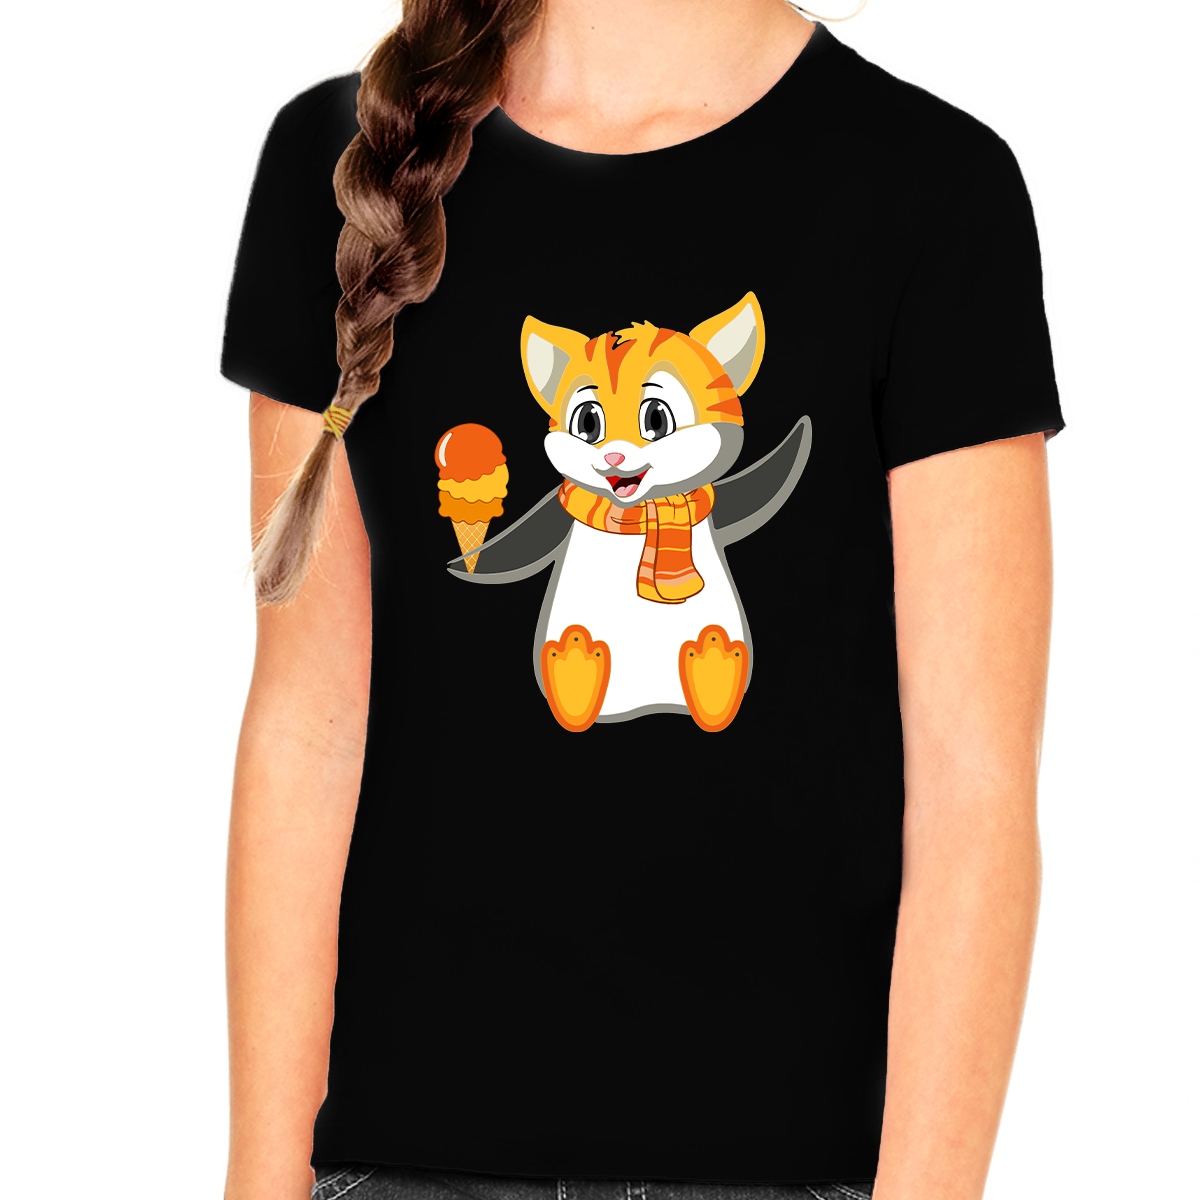 Cute Cat Shirt - Cute Cat Shirts for Girls - Cat Gifts for Girls - Kids Cat Lover Shirts - Fire Fit Designs